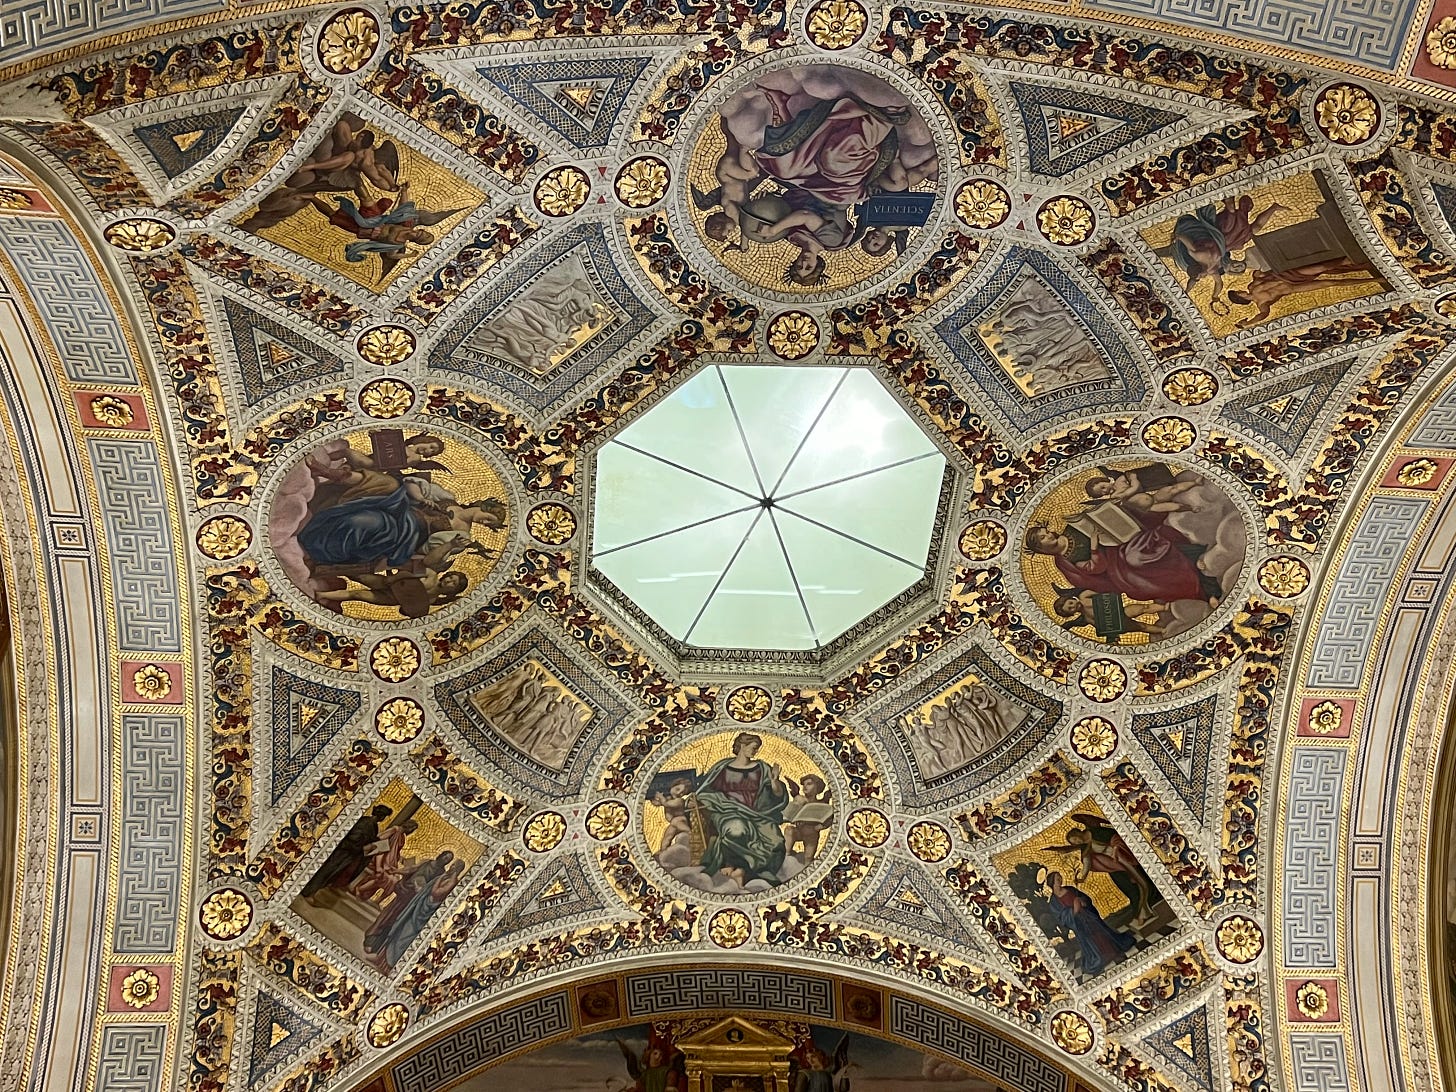 The rotunda: recalling the Vatican Museum and Rafael